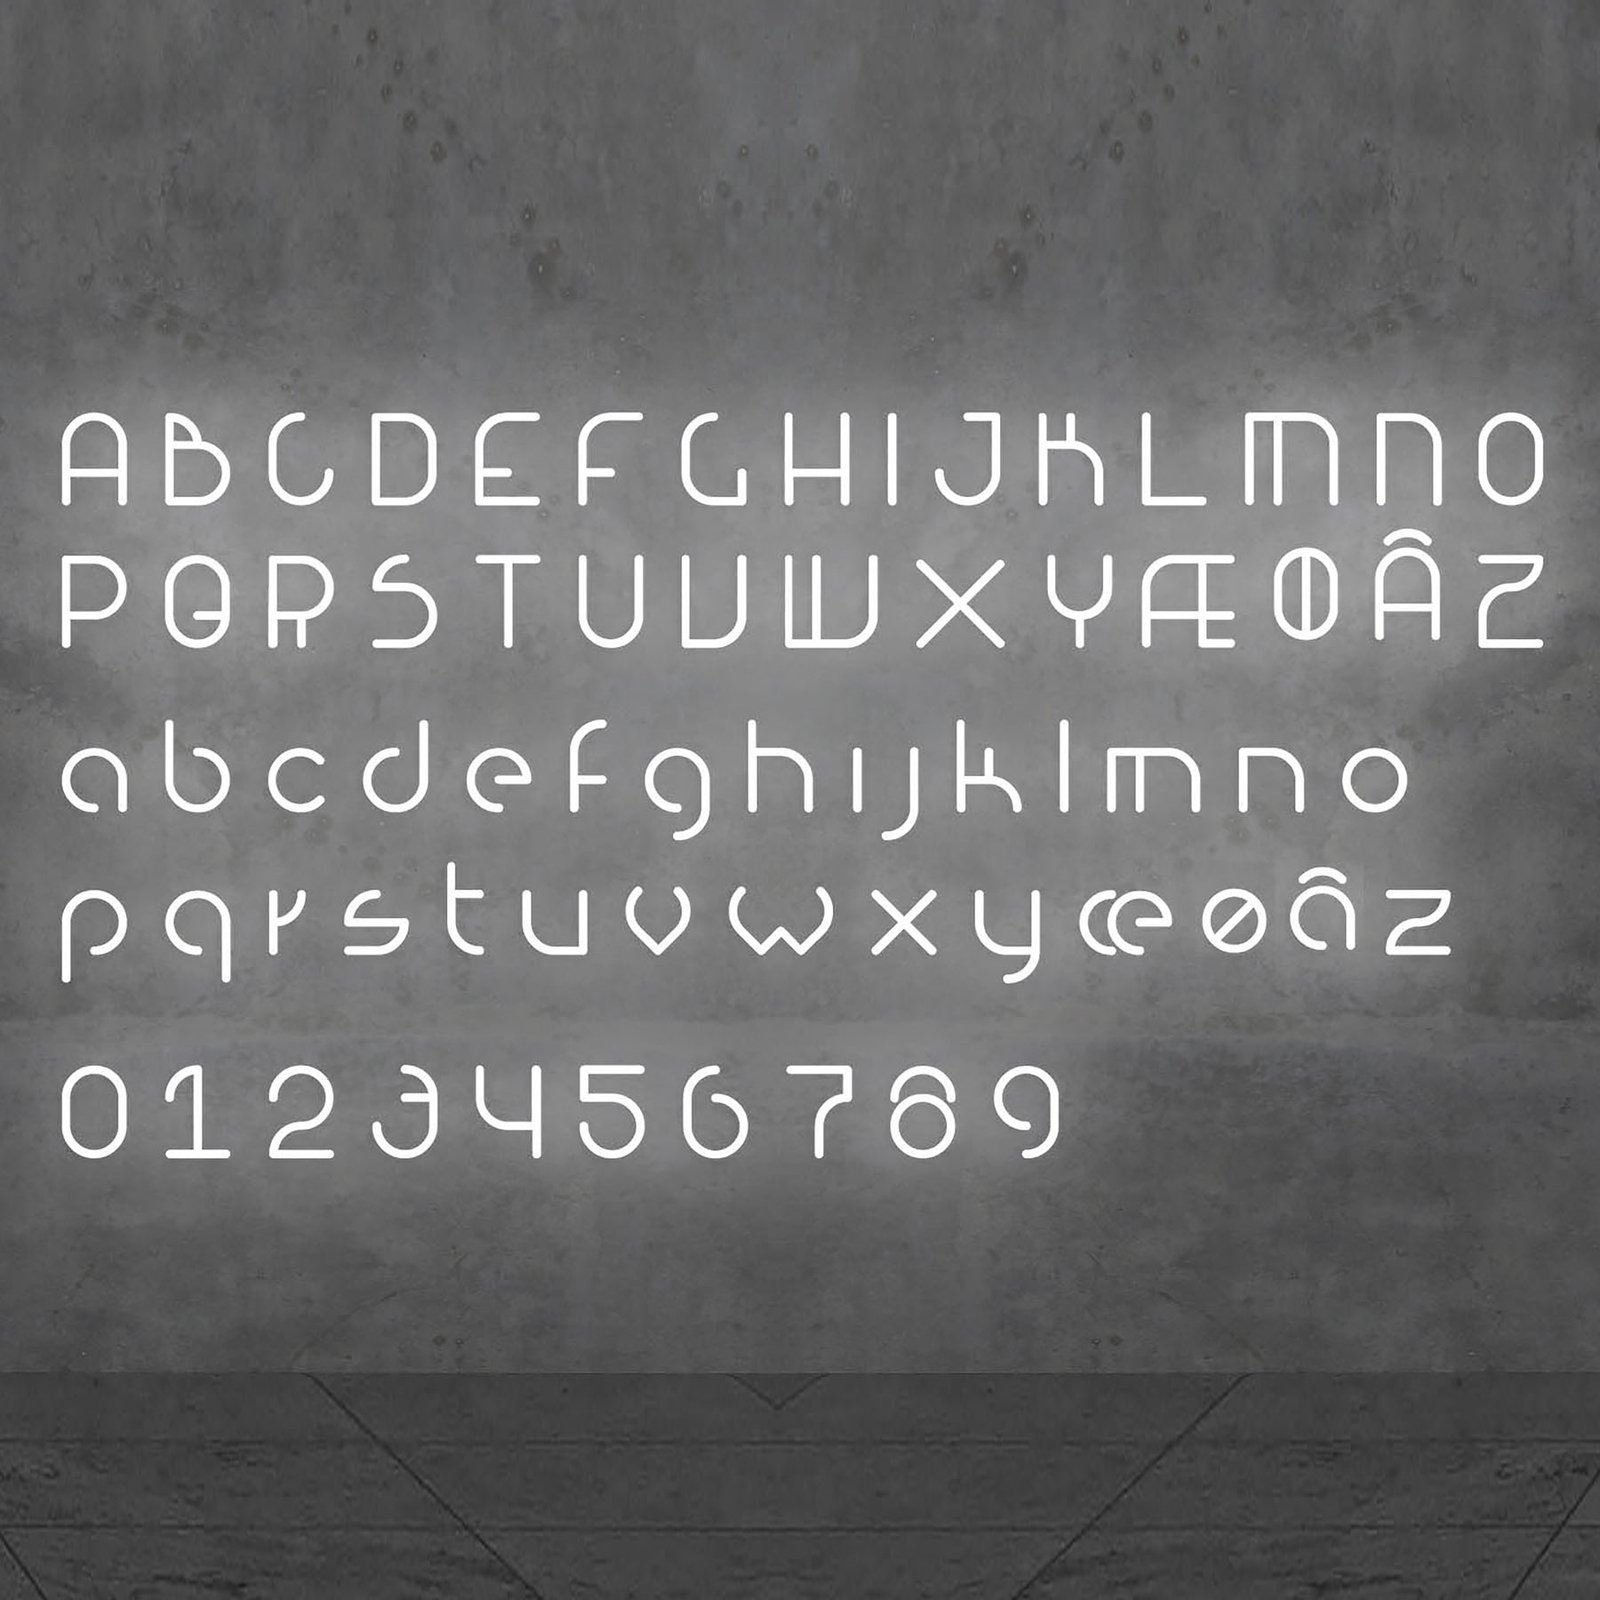 Artemide Alphabet of Light væg, lille bogstav p